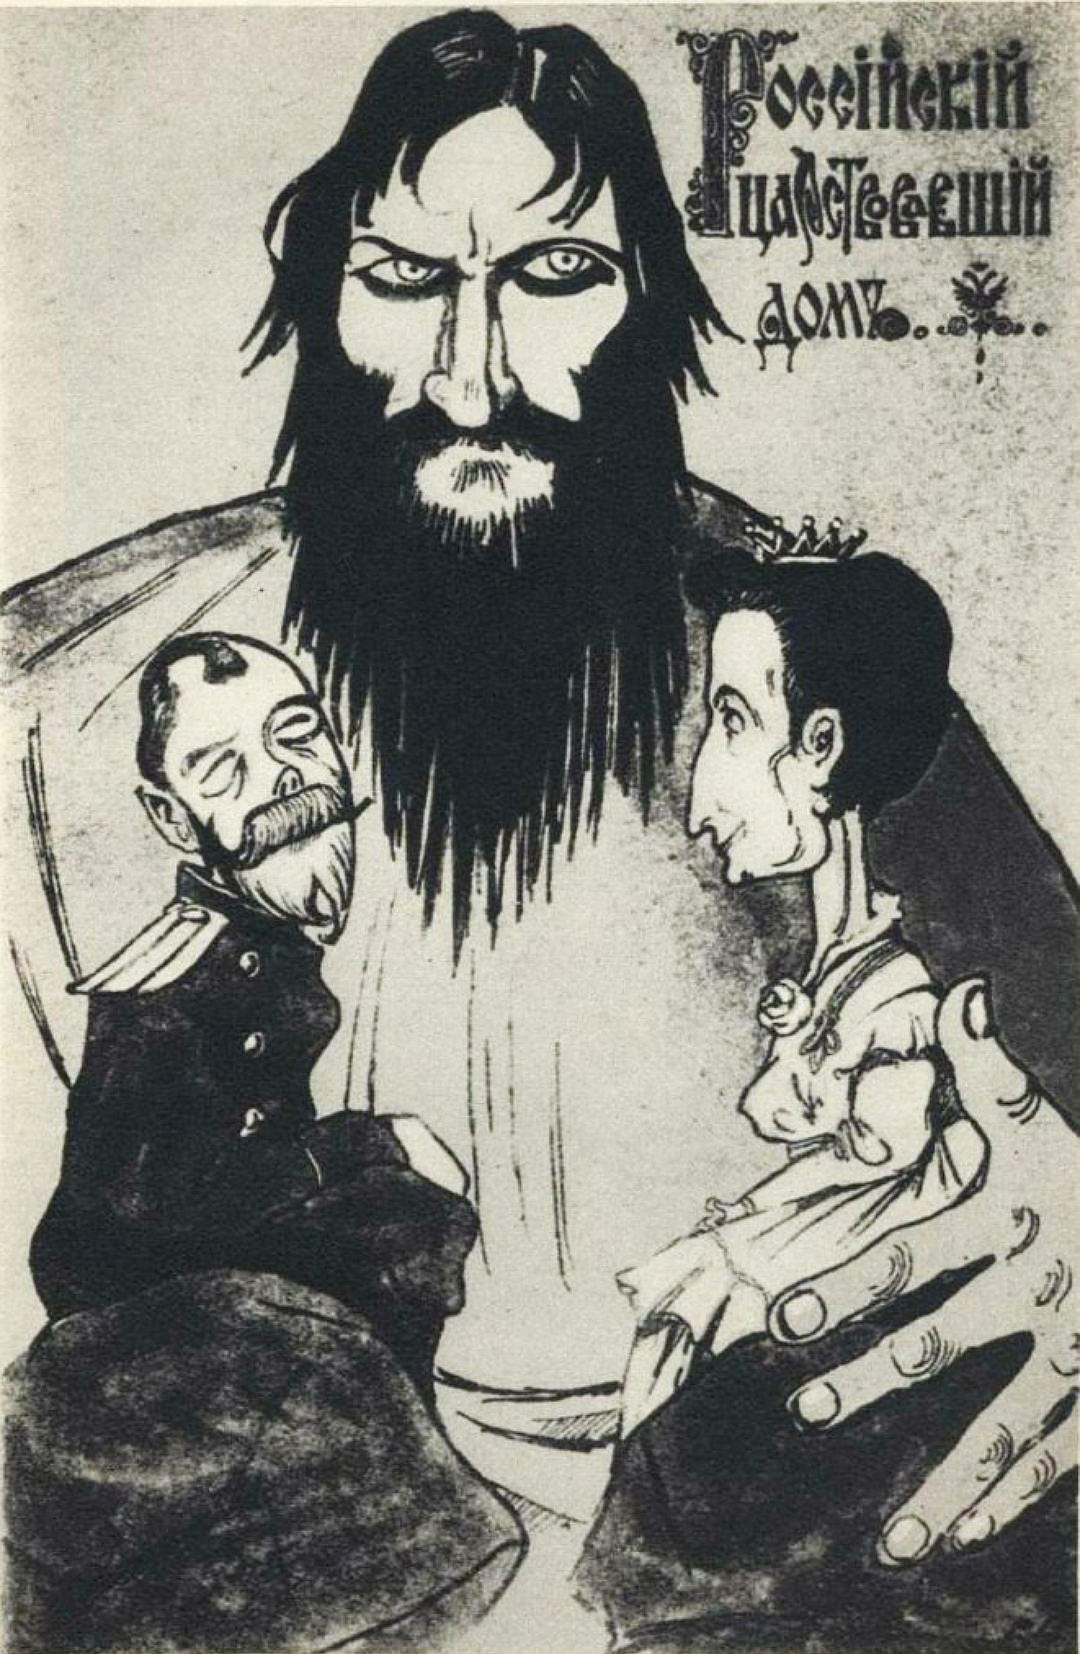 The Life and Murder of Grigori Rasputin